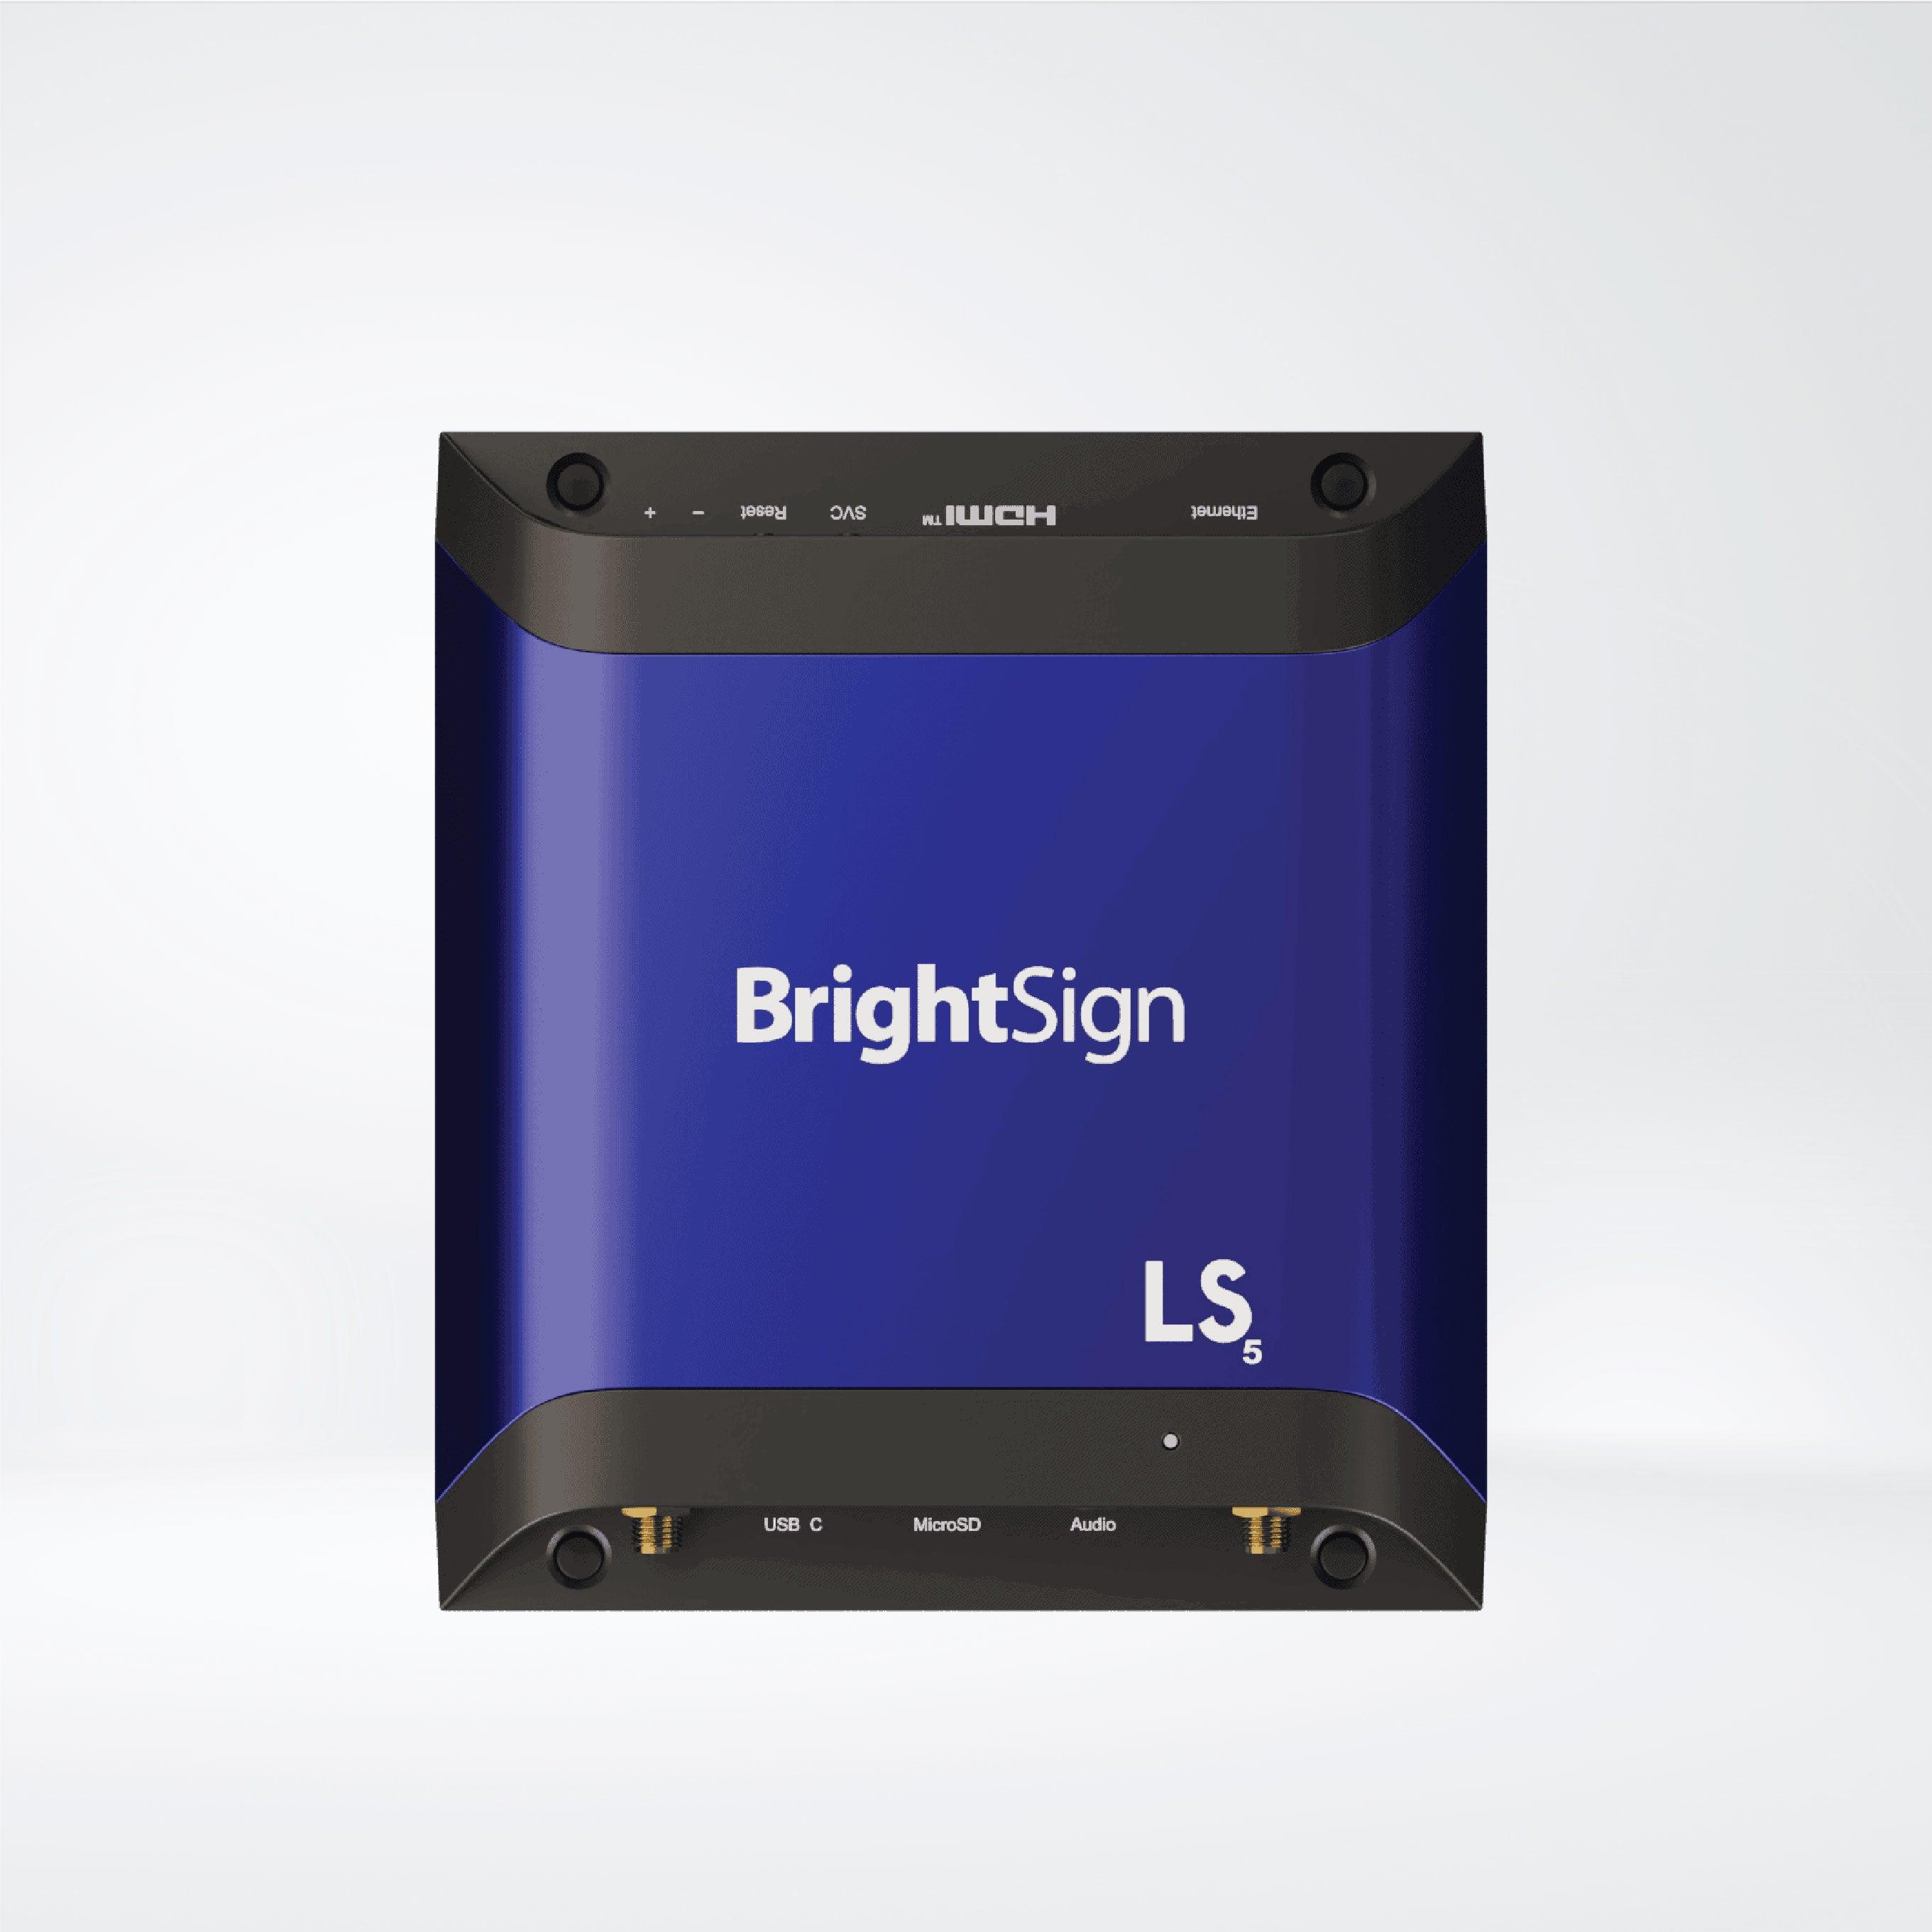 LS425 Low-Cost Digital Signage Player + 64GB Micro SD - Riverplus